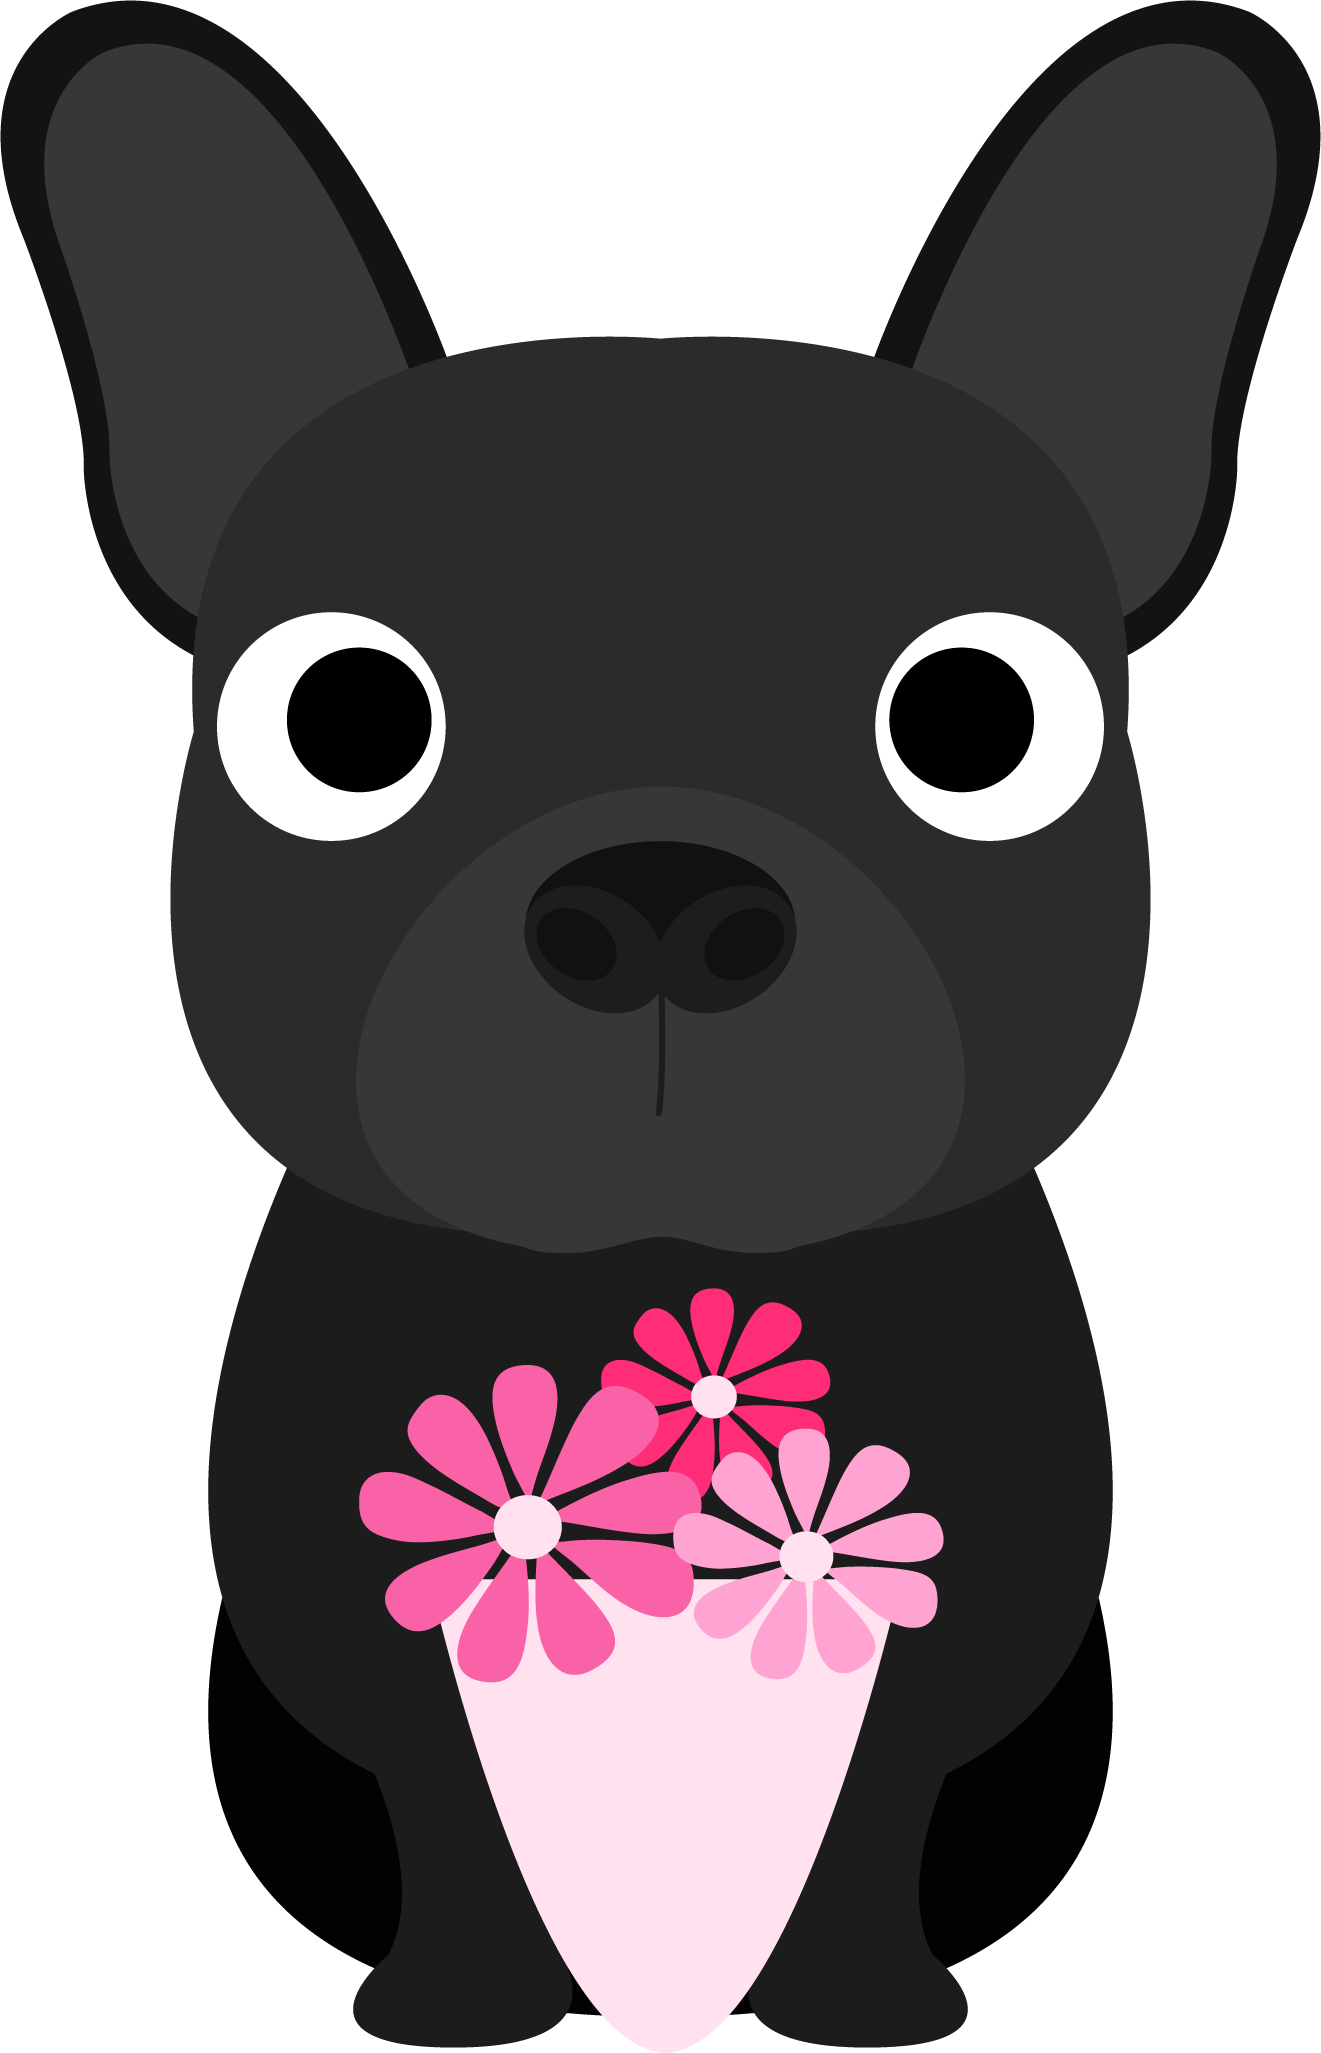 Valentine’s Day dog holding flowers